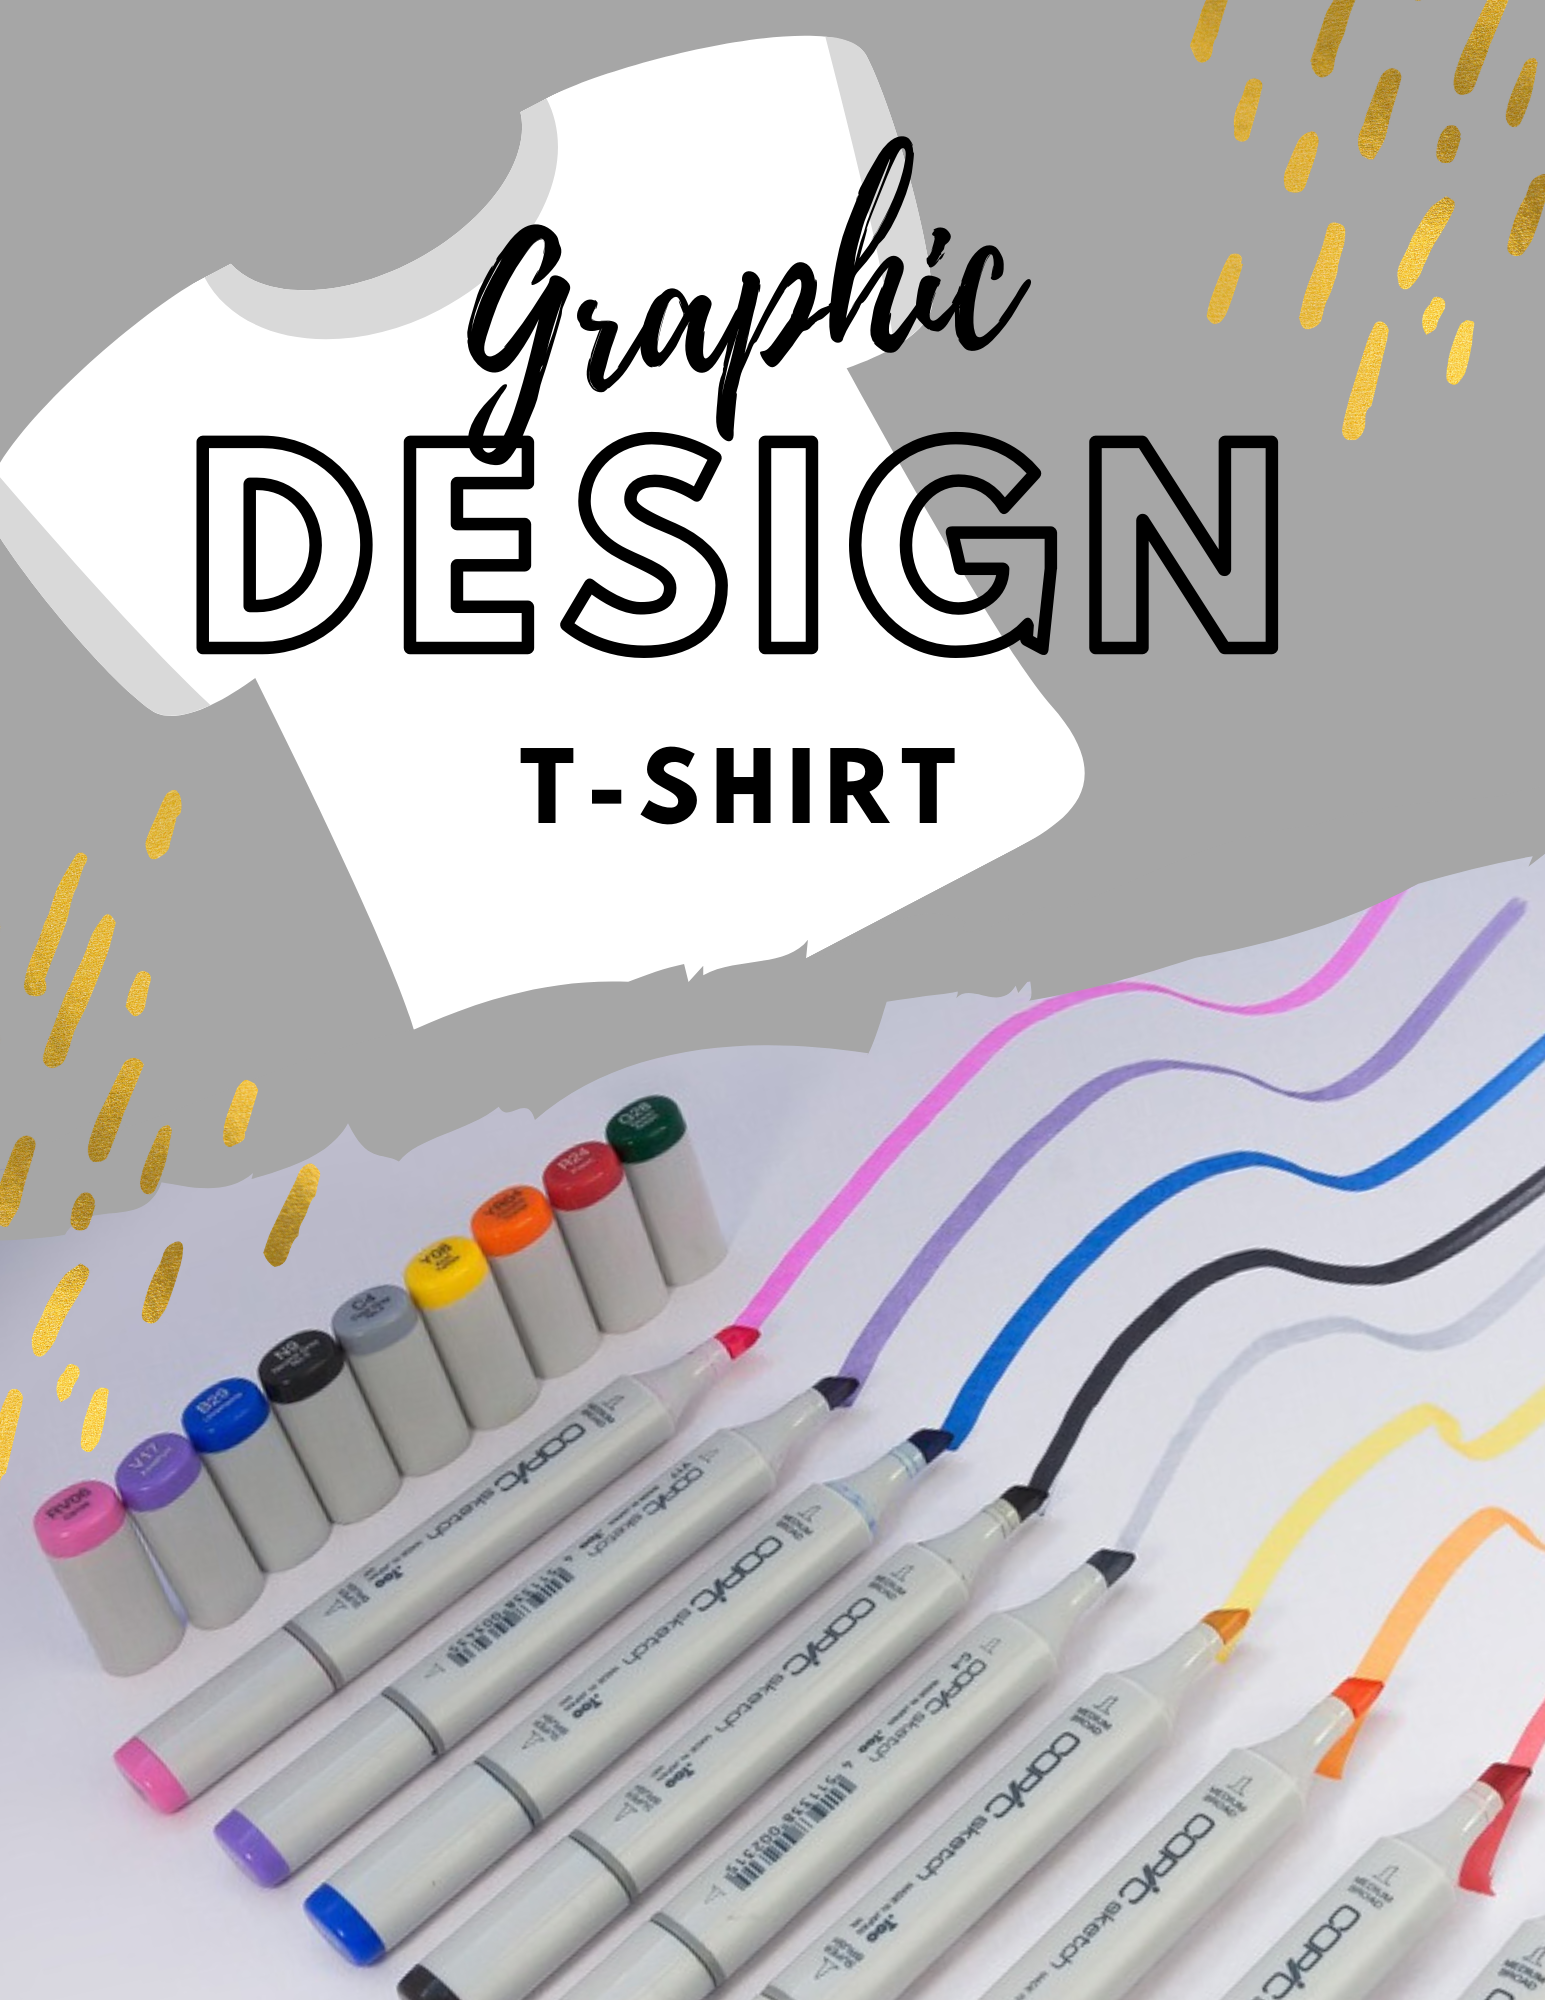 graphic design t-shirt